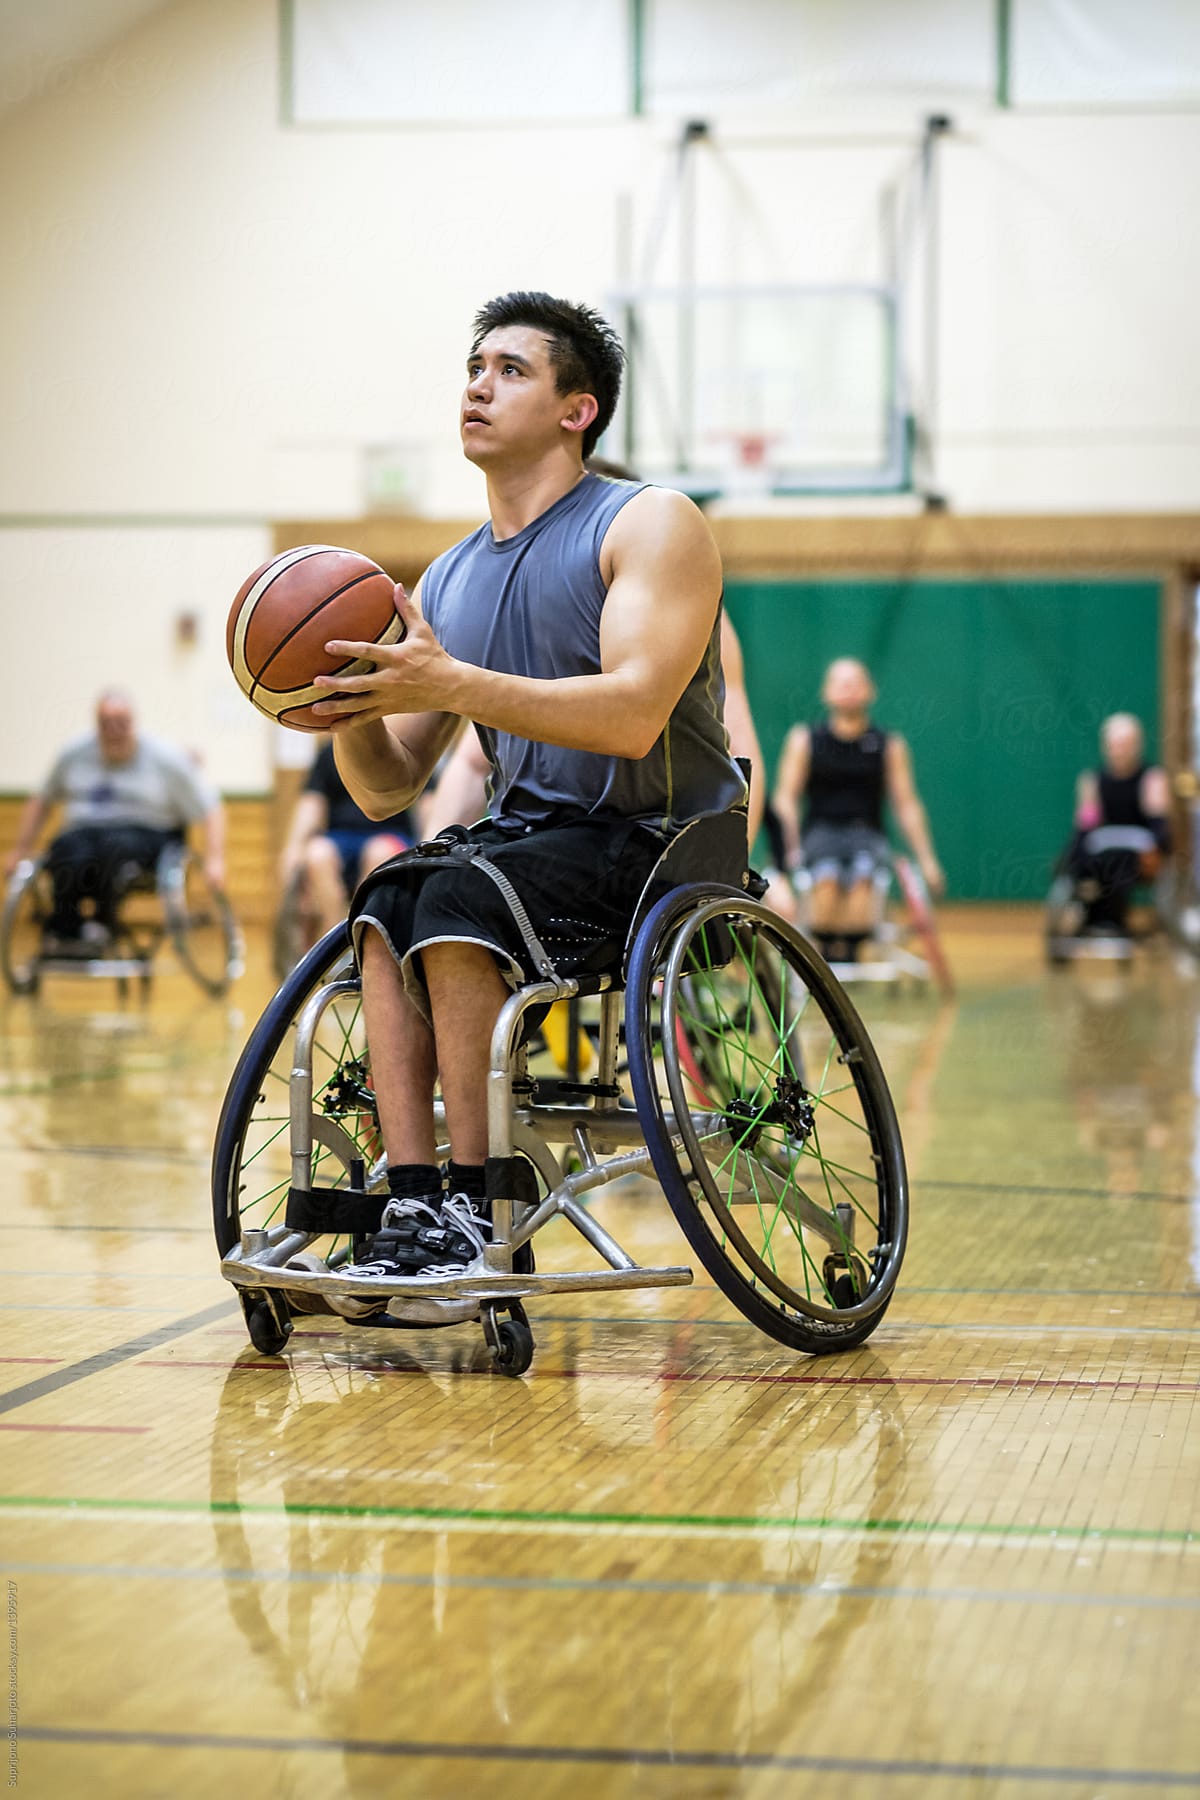 Wheelchair Basketball Athlete in Practice